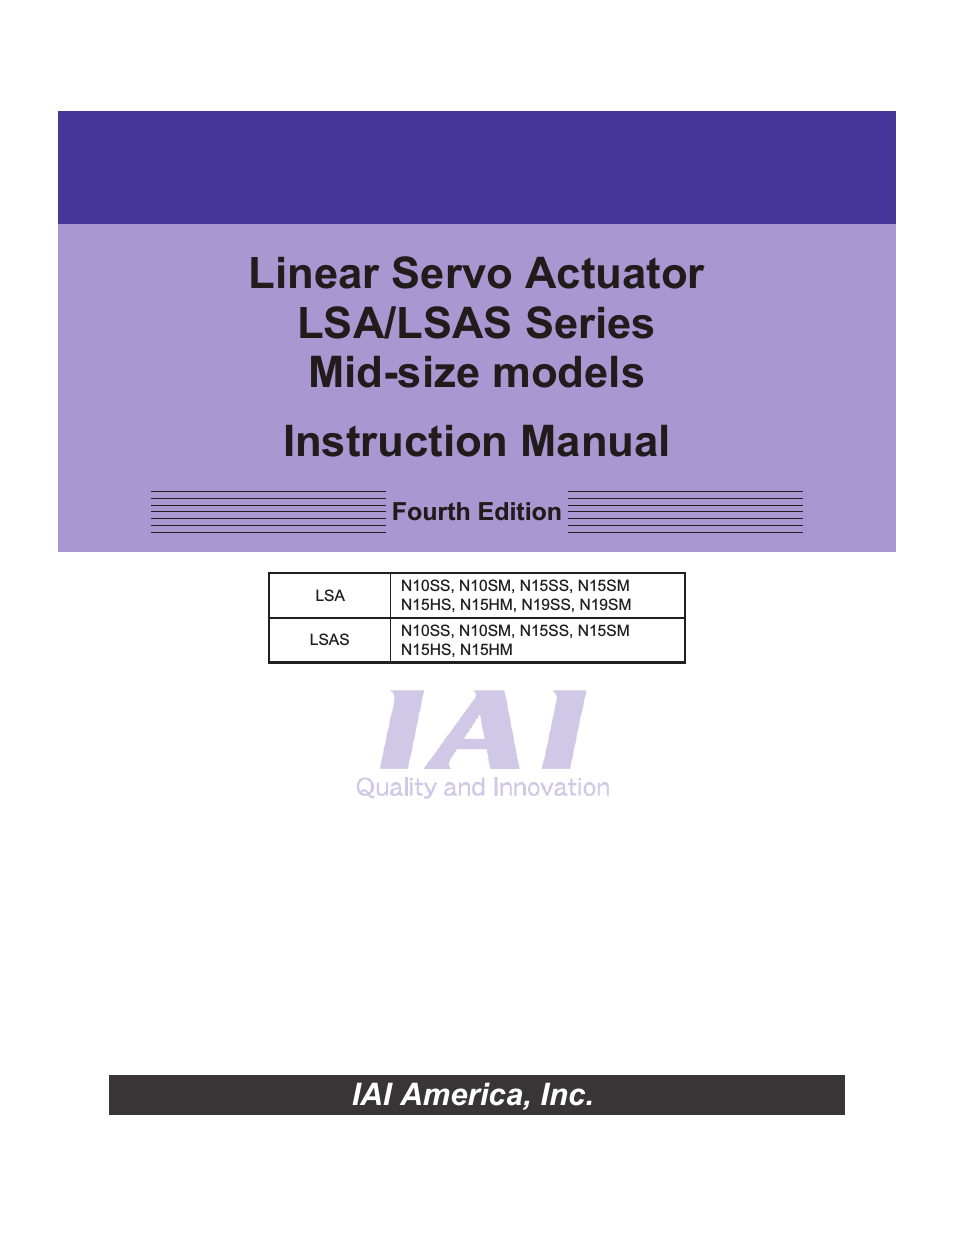 LSA-N10SM